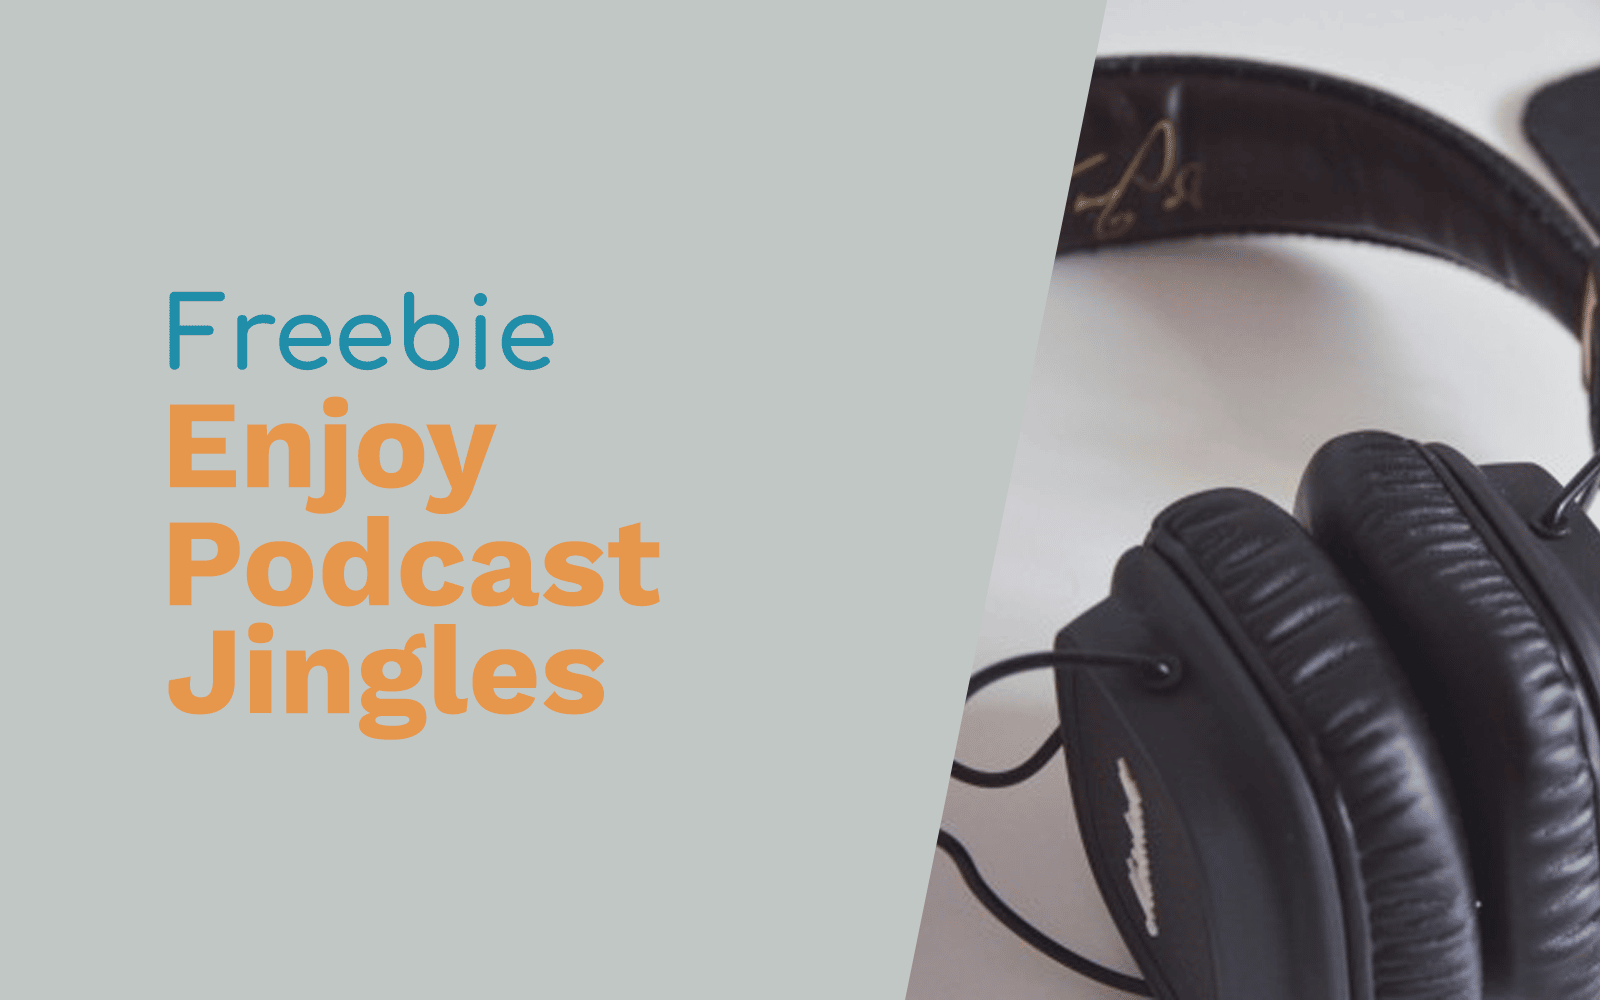 Podcast Jingles – Enjoyed This Episode Free Jingles podcast jingles Music Radio Creative